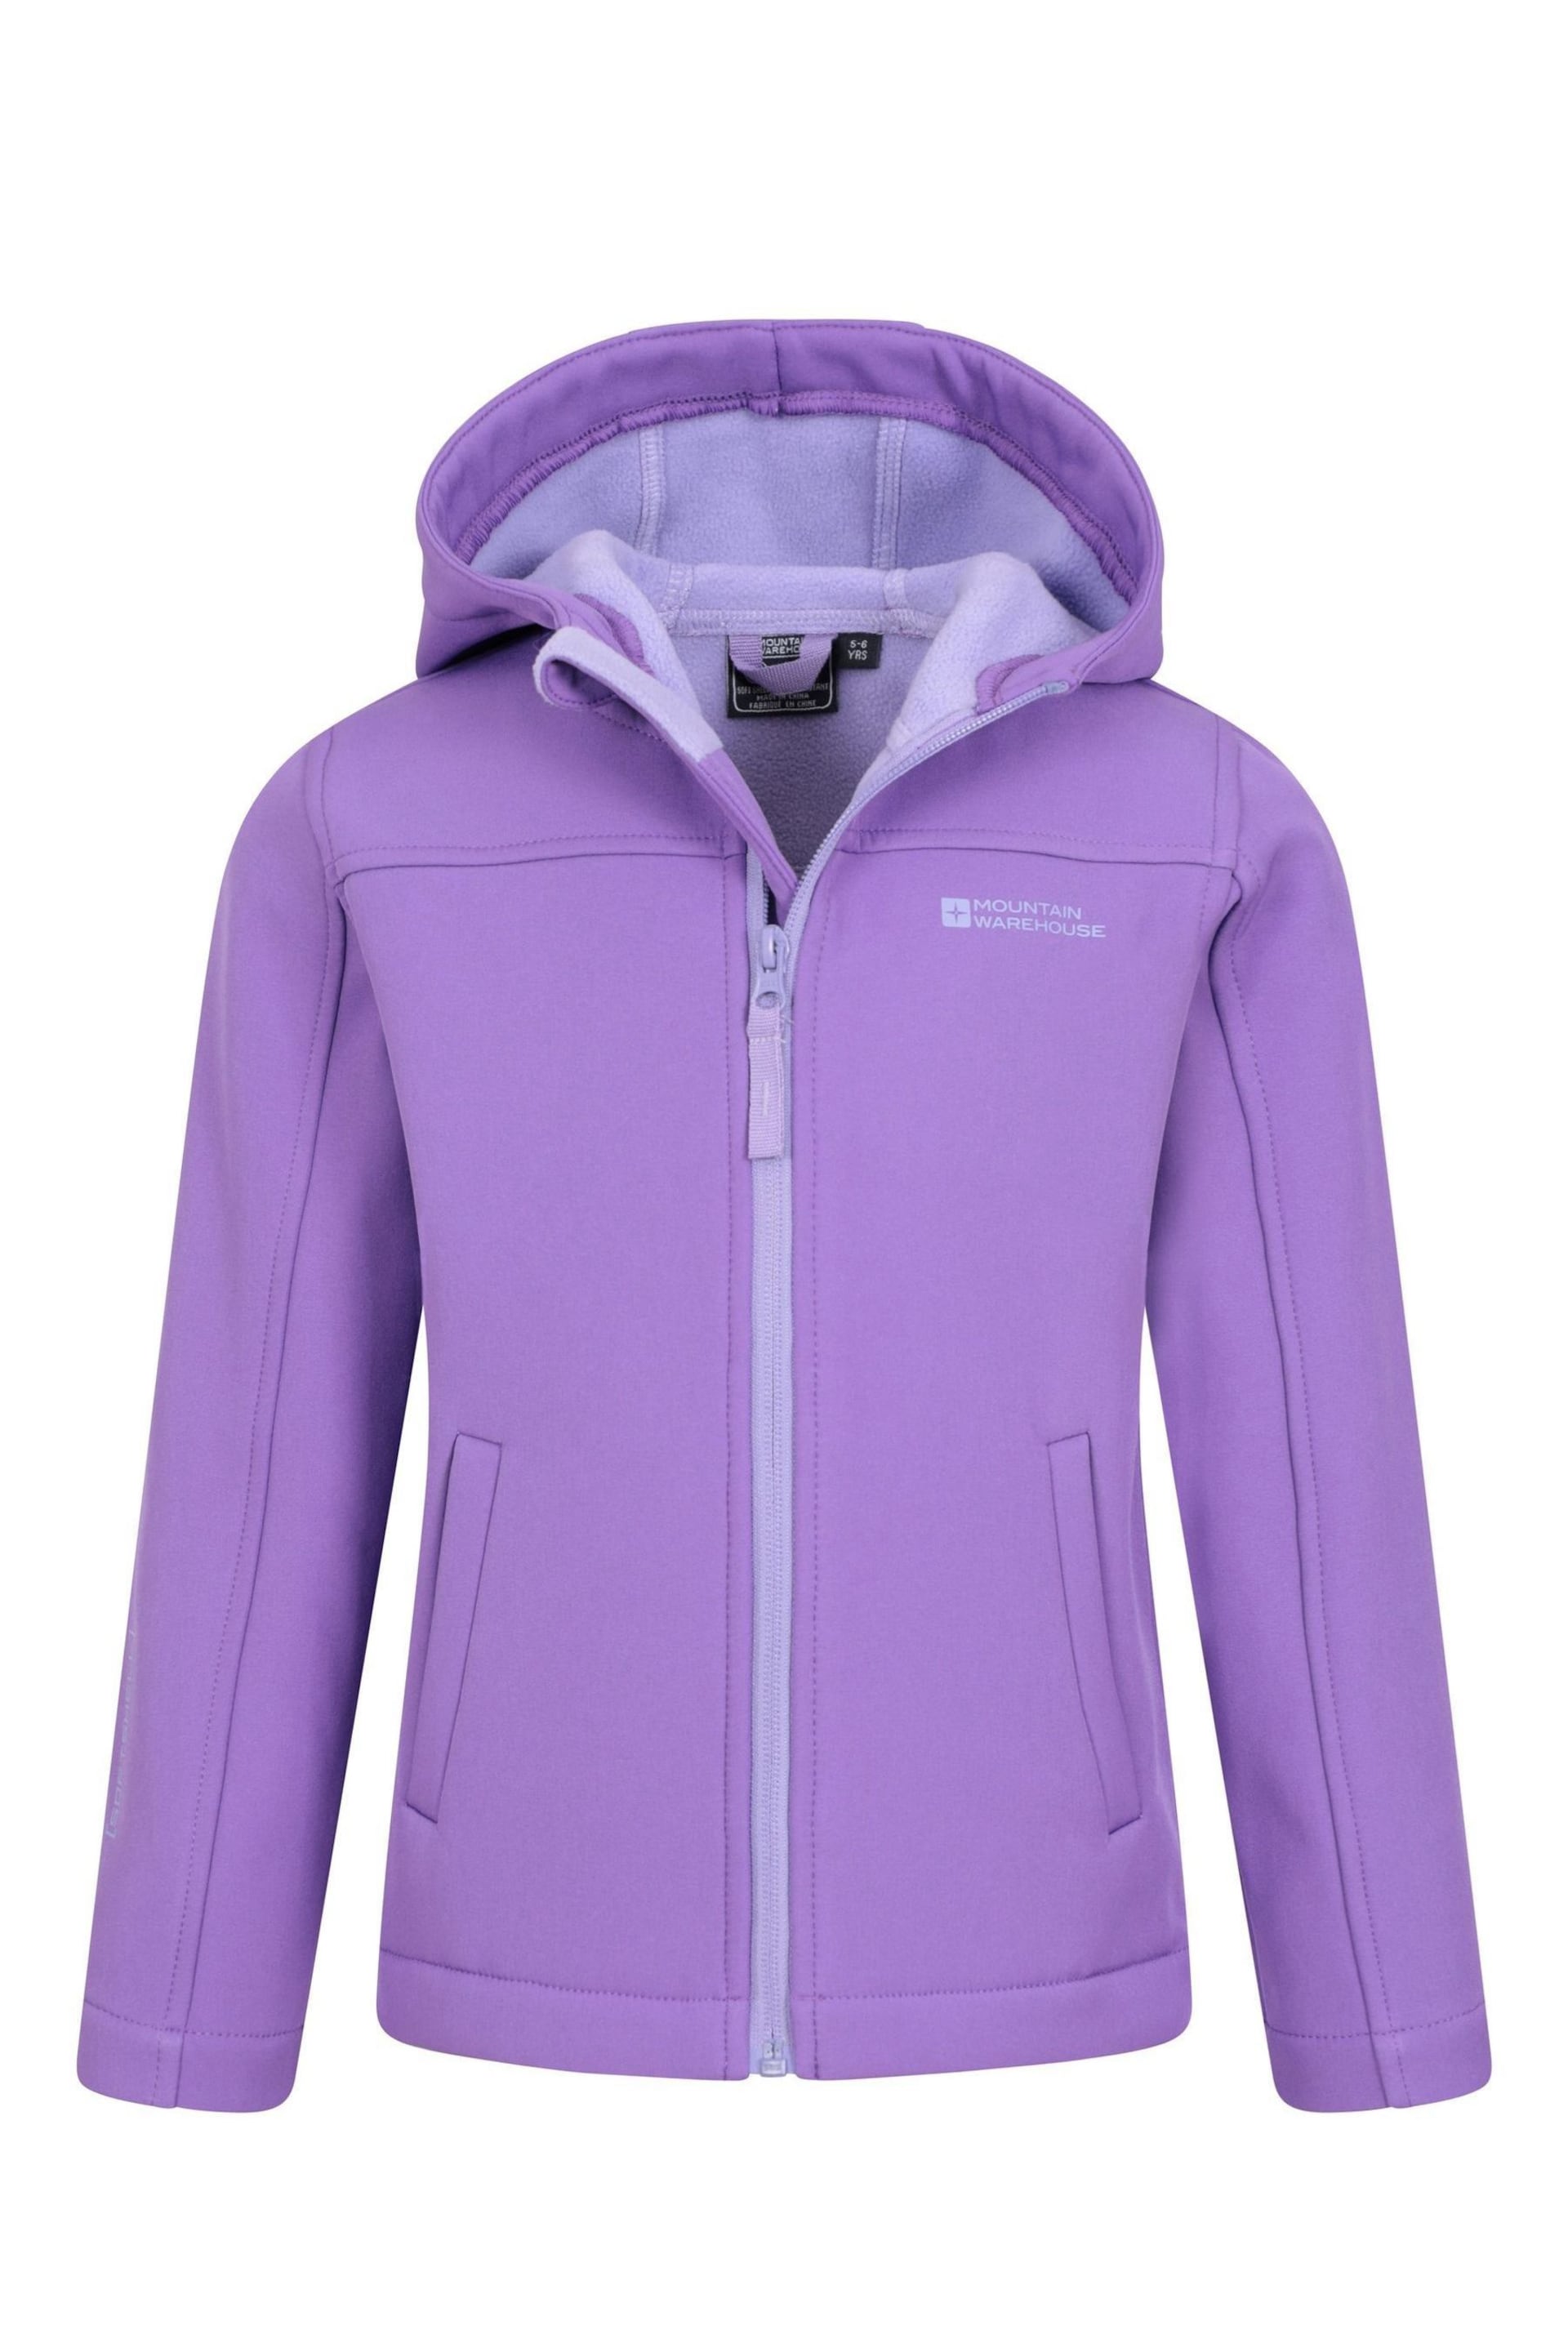 Mountain Warehouse Purple Chrome Exodus Kids Water Resistant Softshell Jacket - Image 5 of 5